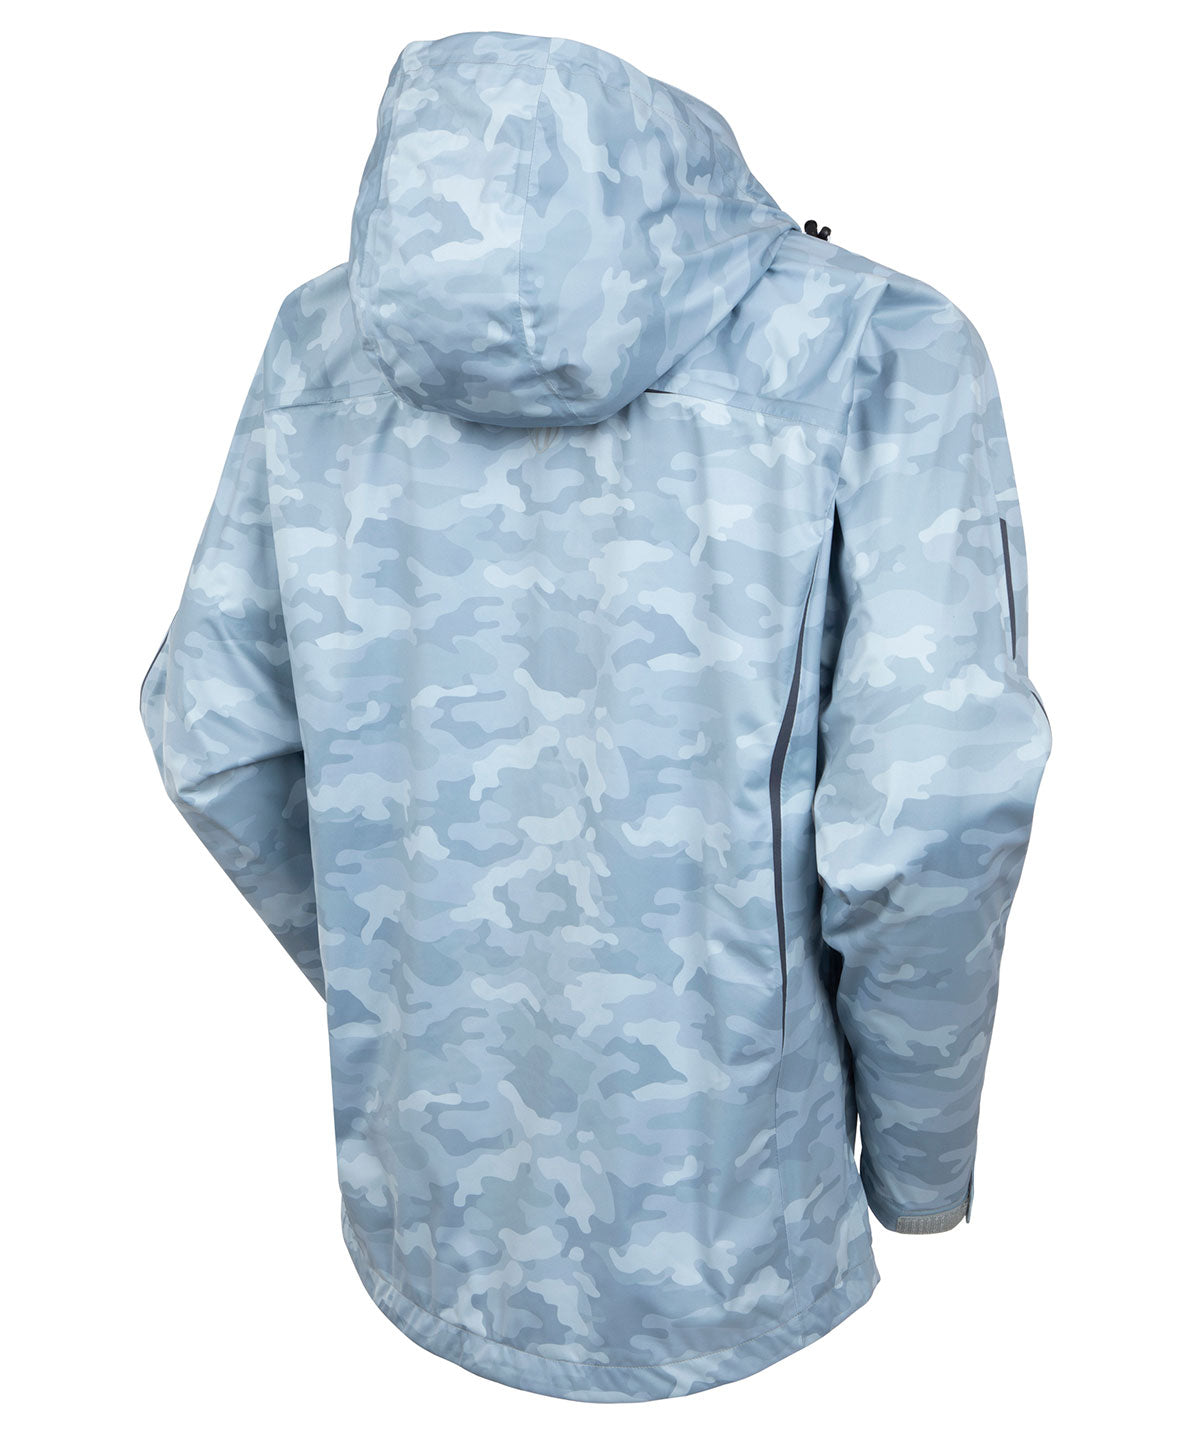 Men's Jay Zephal FlexTech Waterproof Ultra-Stretch Jacket Medium Midnight Pure White